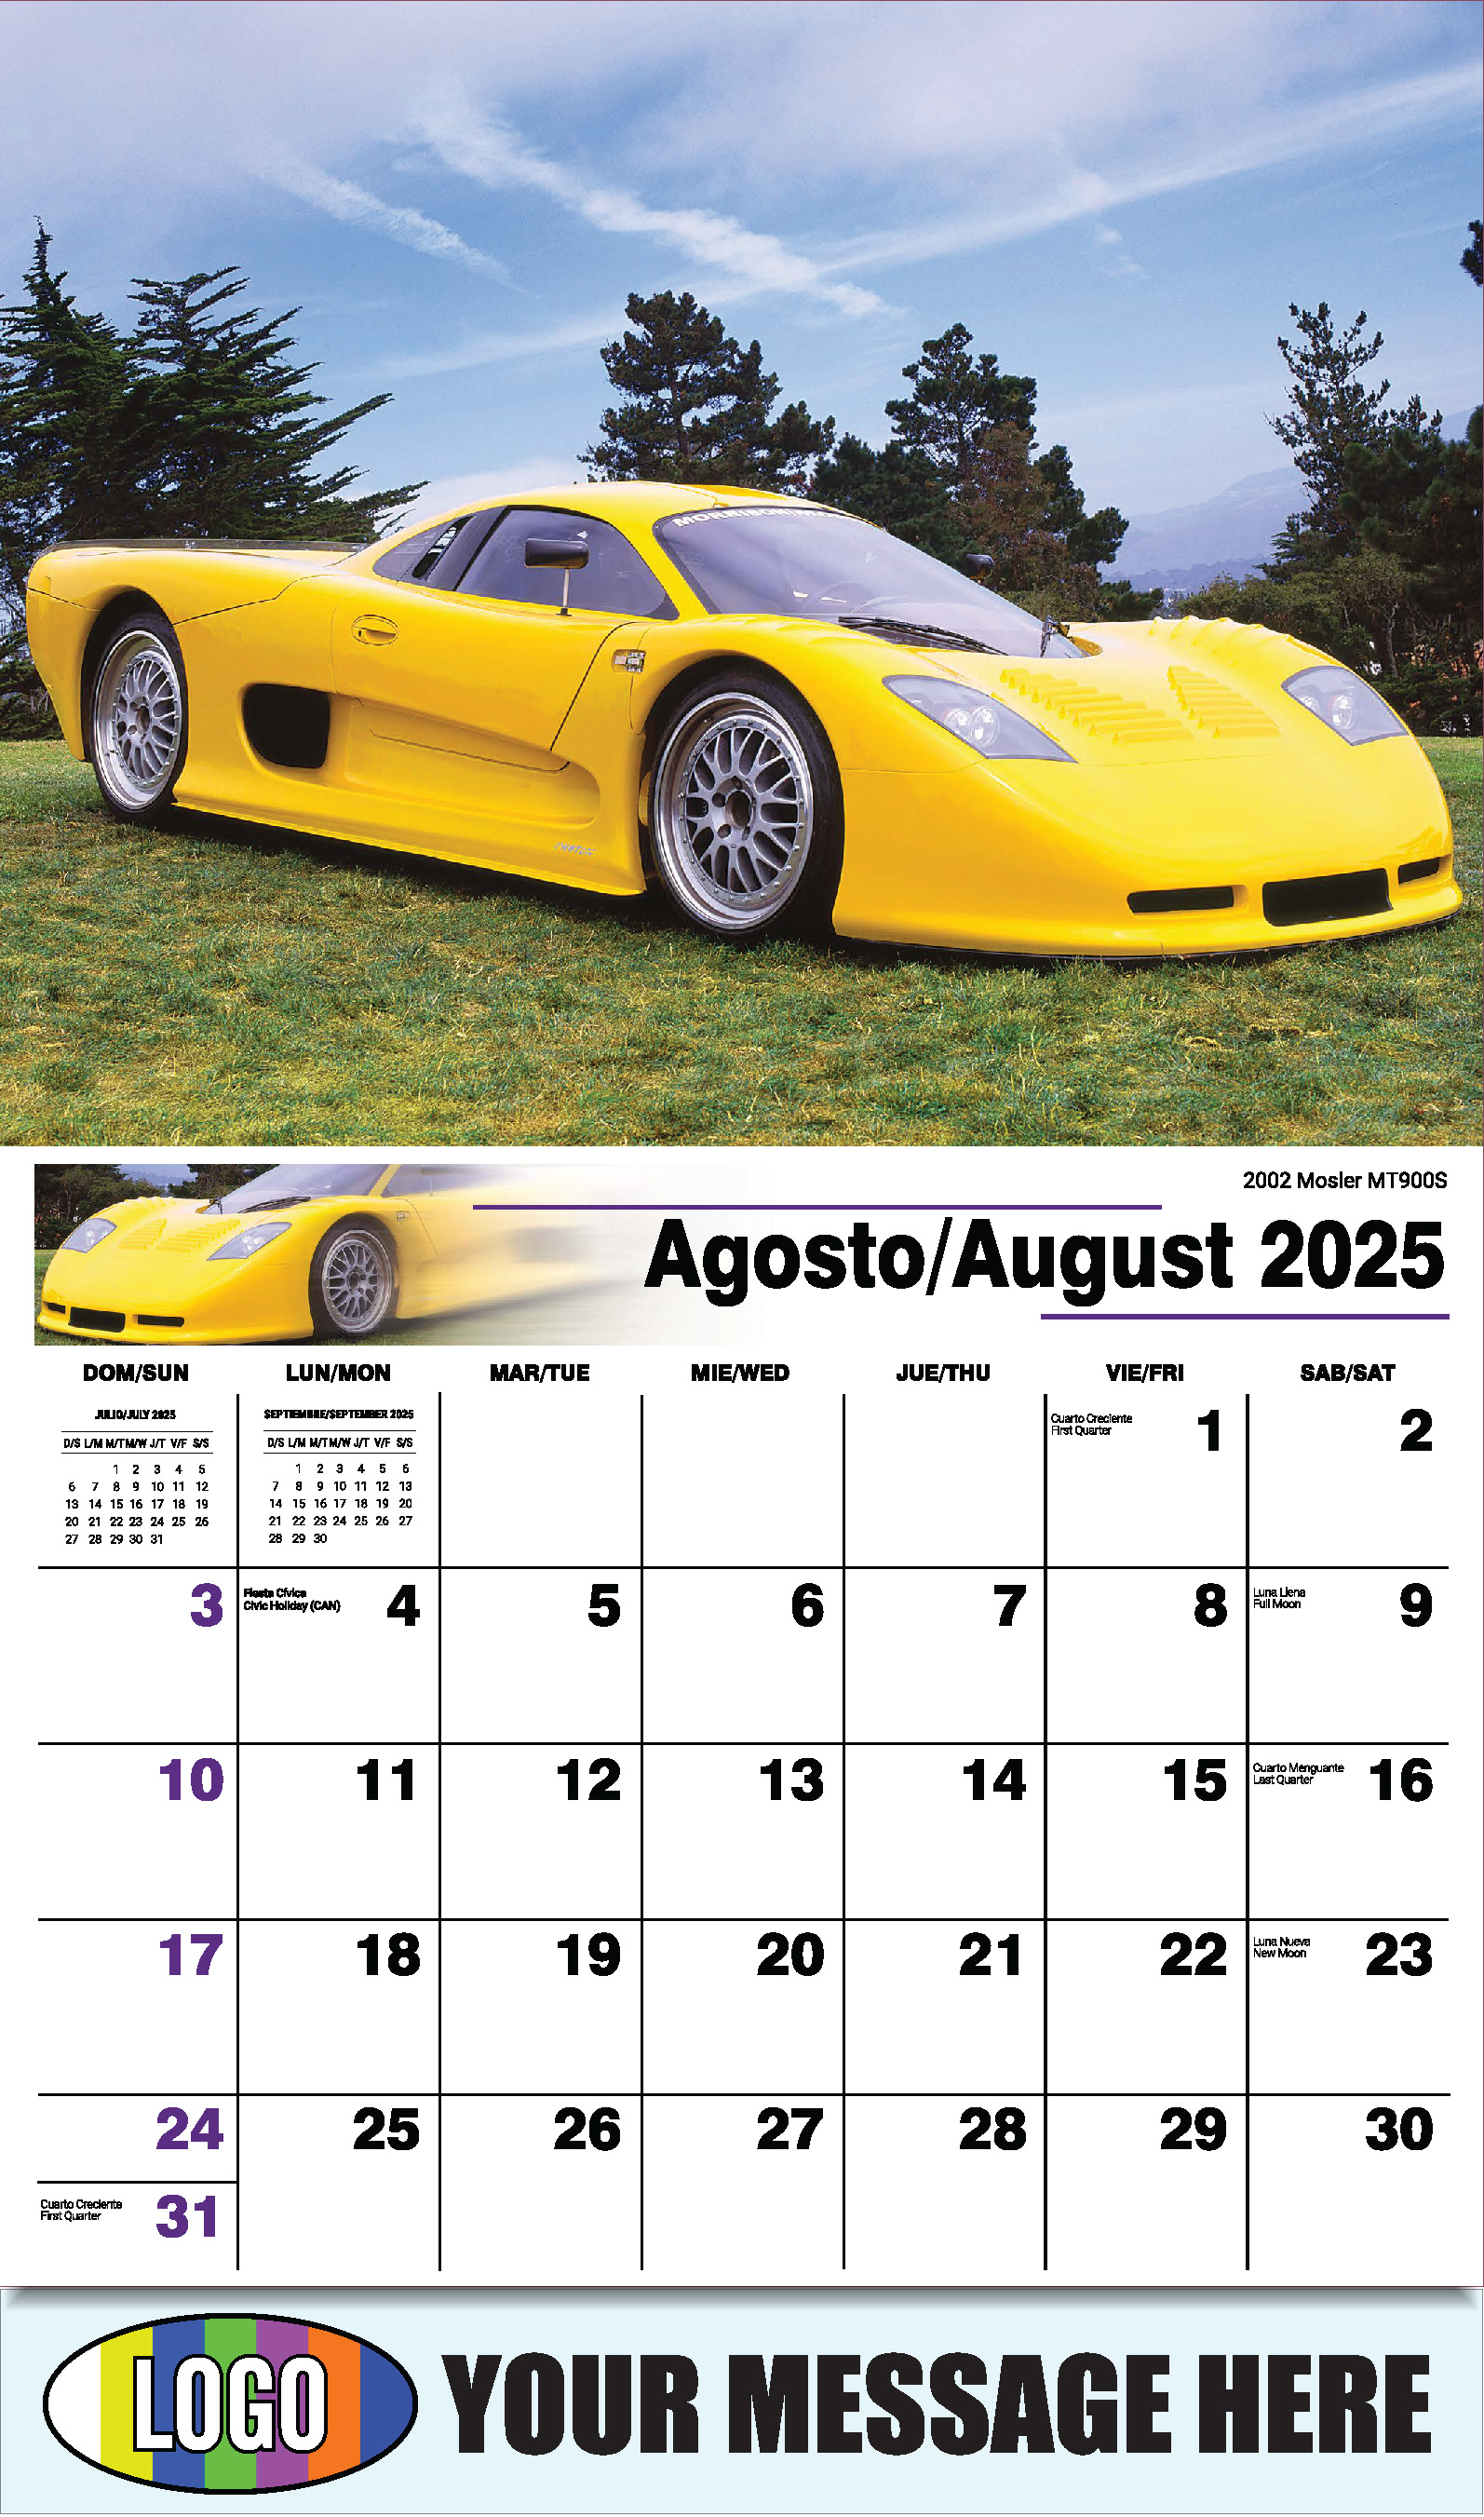 Exotic Cars 2025 Bilingual Automotive Business Promotional Calendar - August